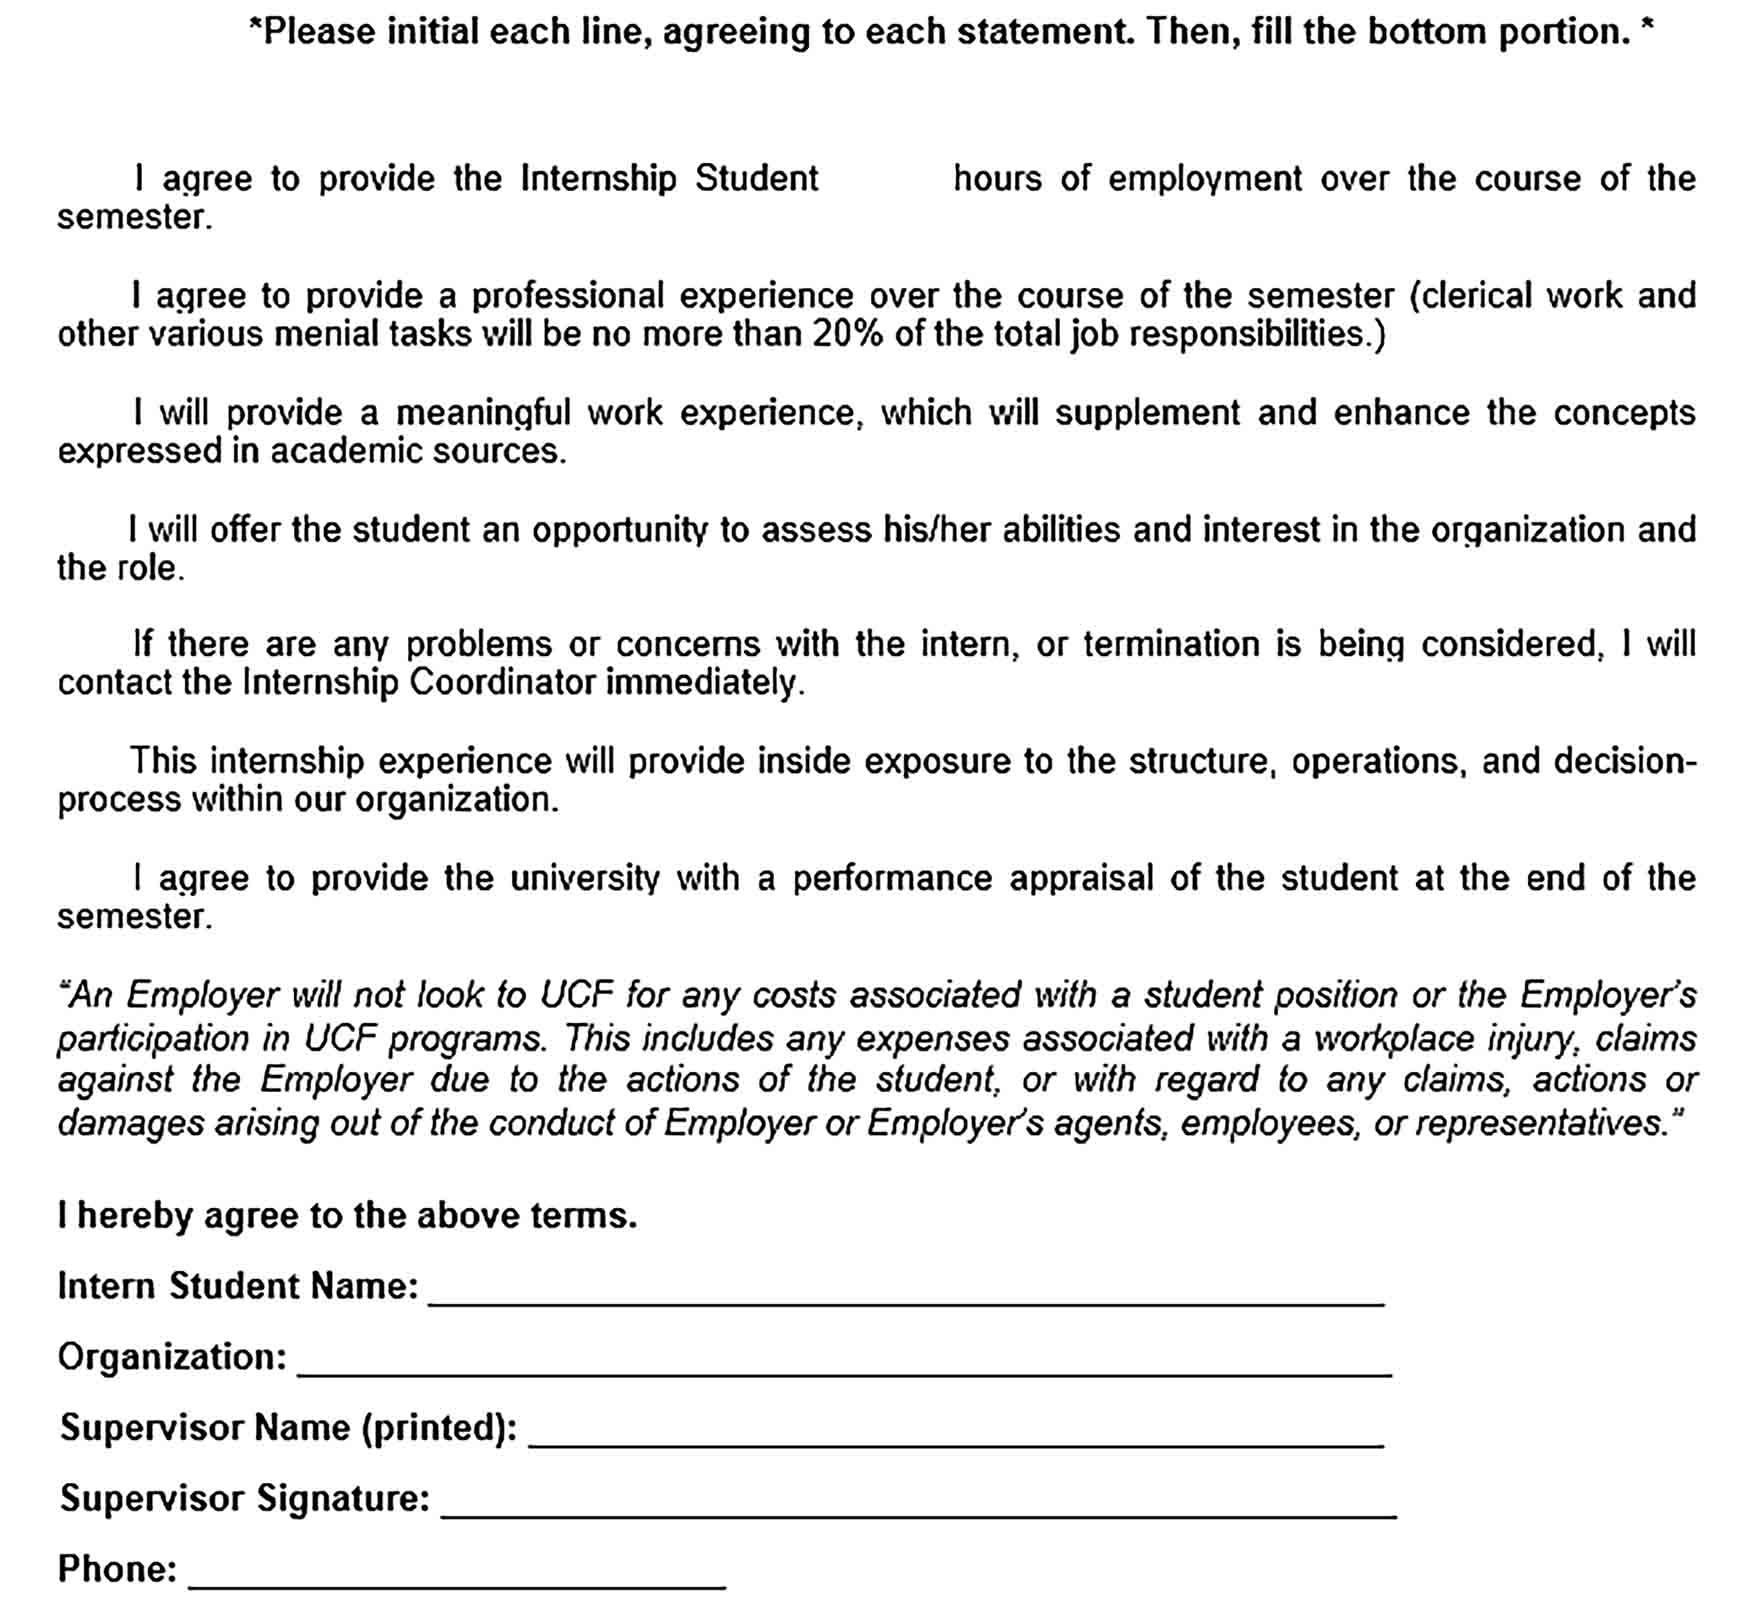 Sample Employer Internship Agreement 004